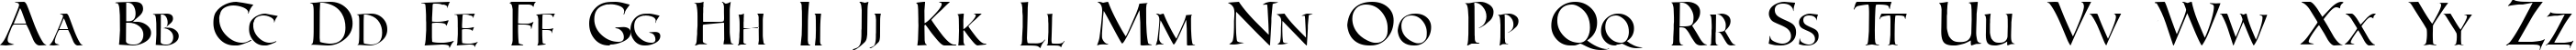 Пример написания английского алфавита шрифтом Roman Caps